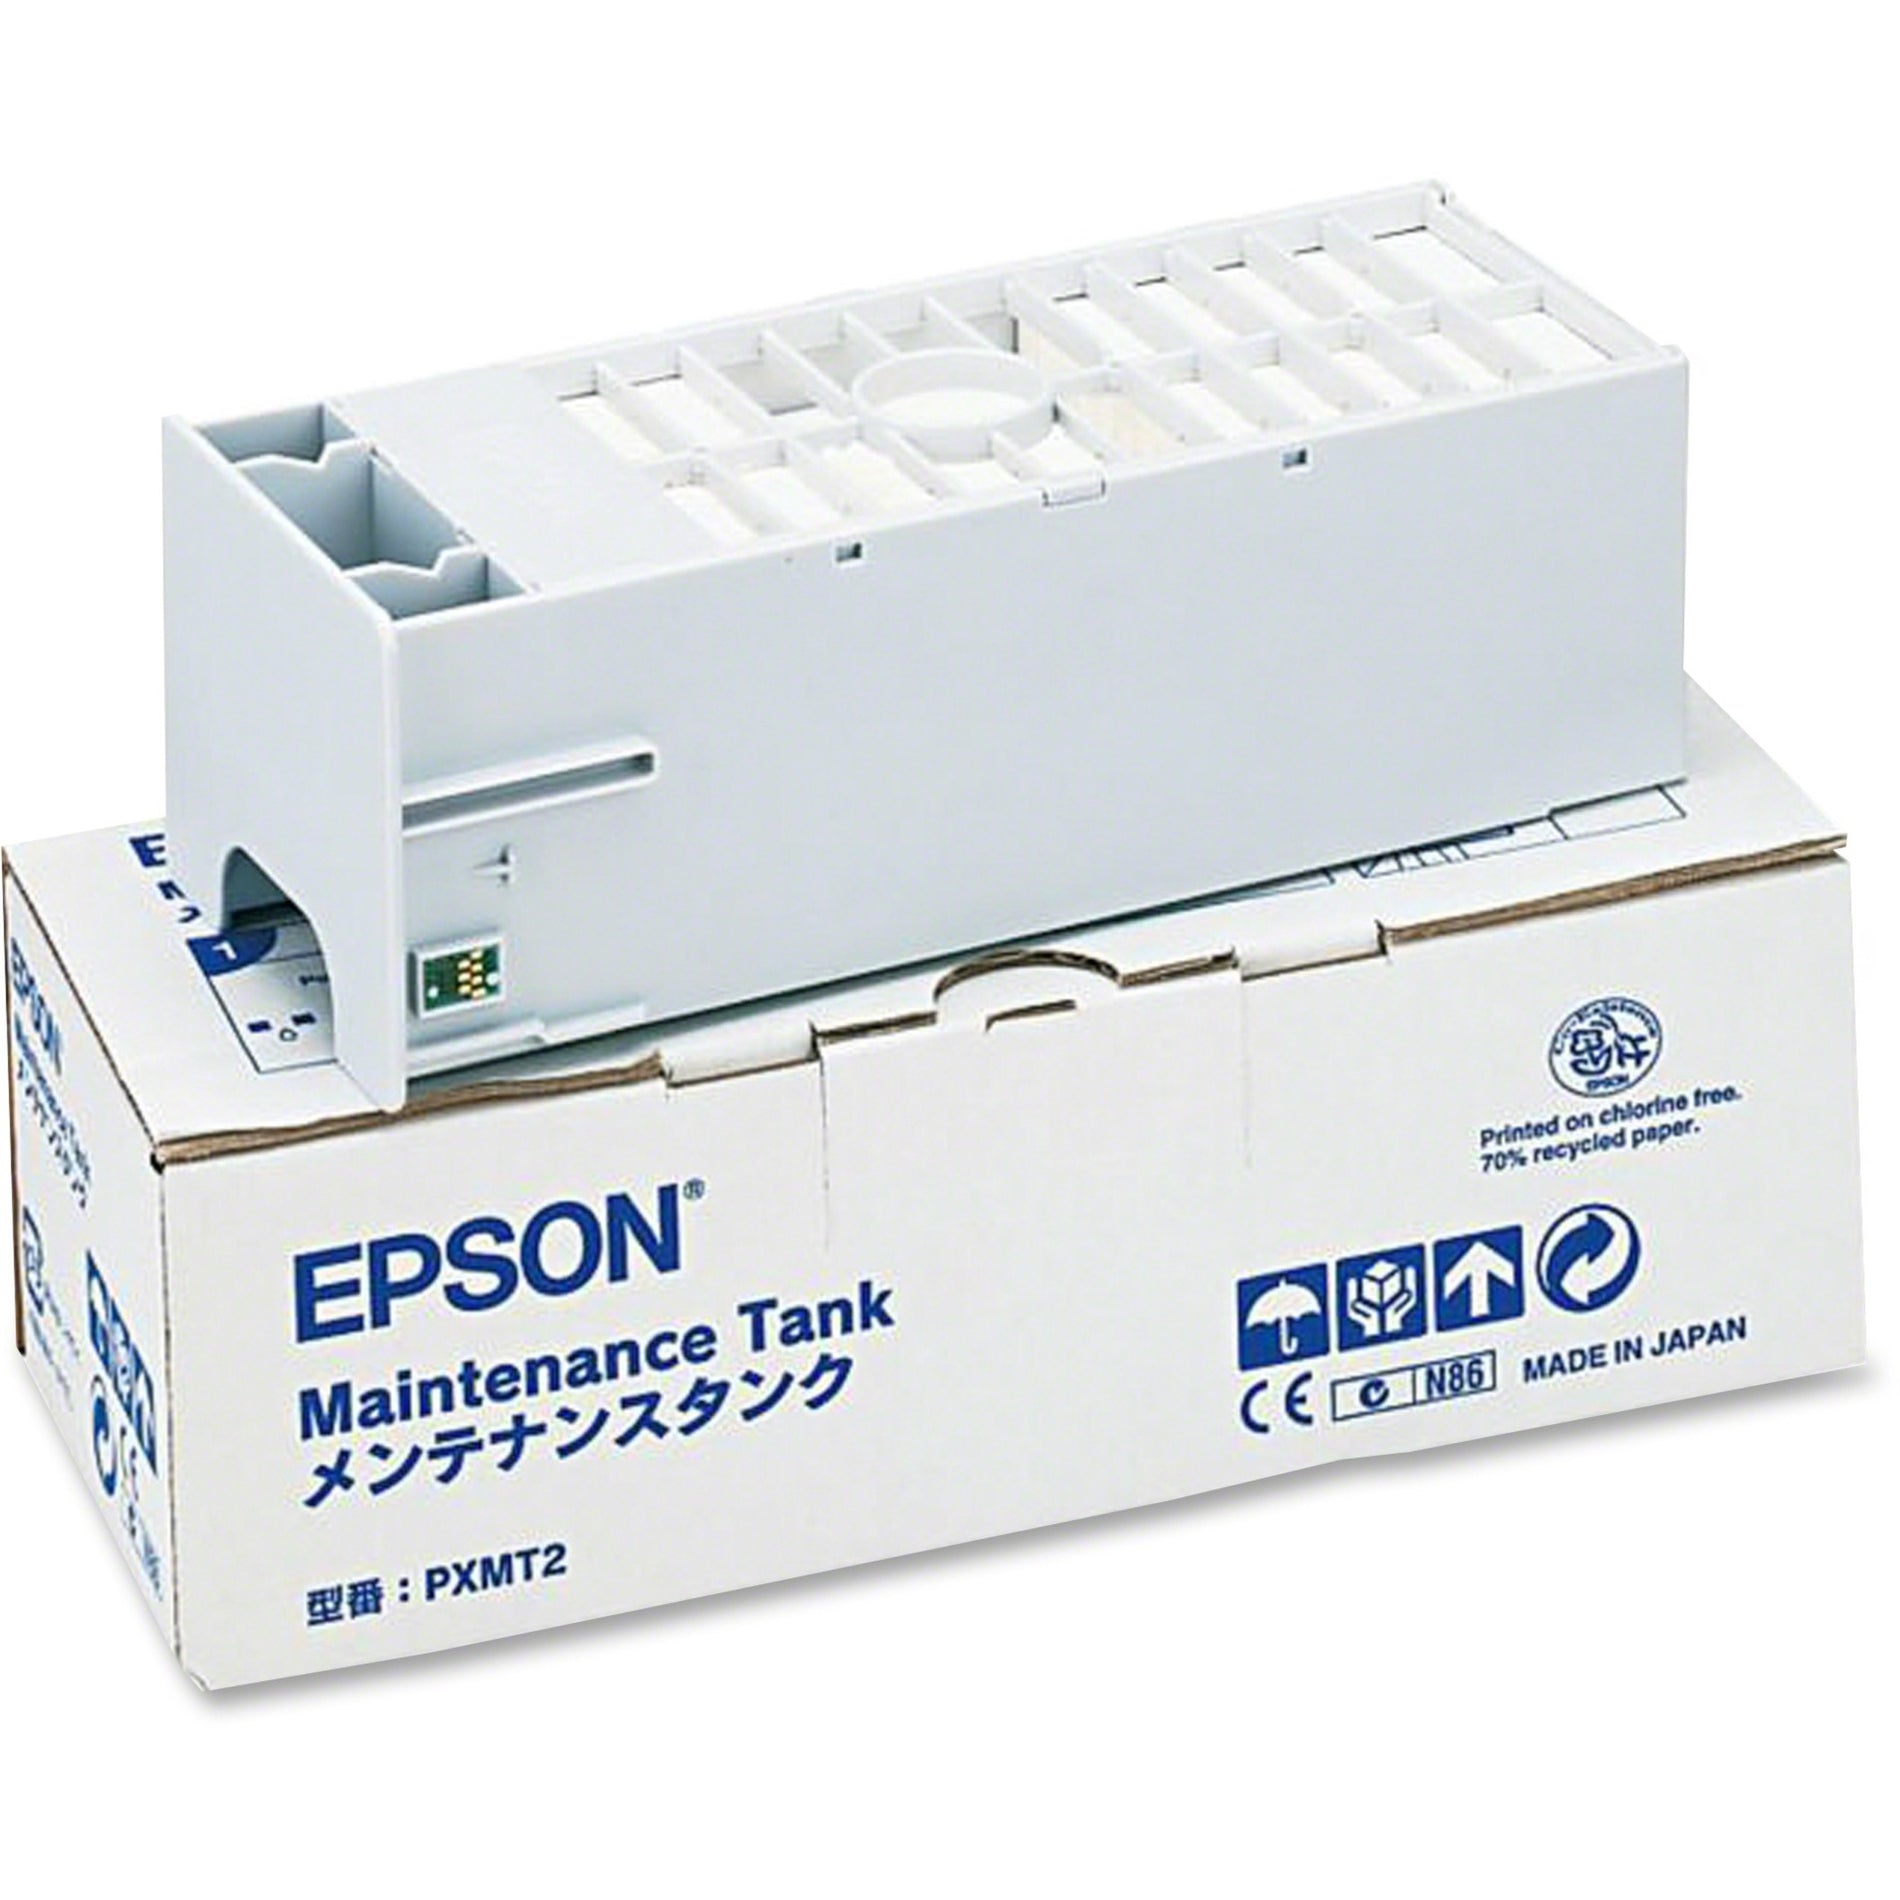 Epson C12C890191 Stylus Pro Replacement Ink Maintenance Tank, Easy and Efficient Printer Maintenance